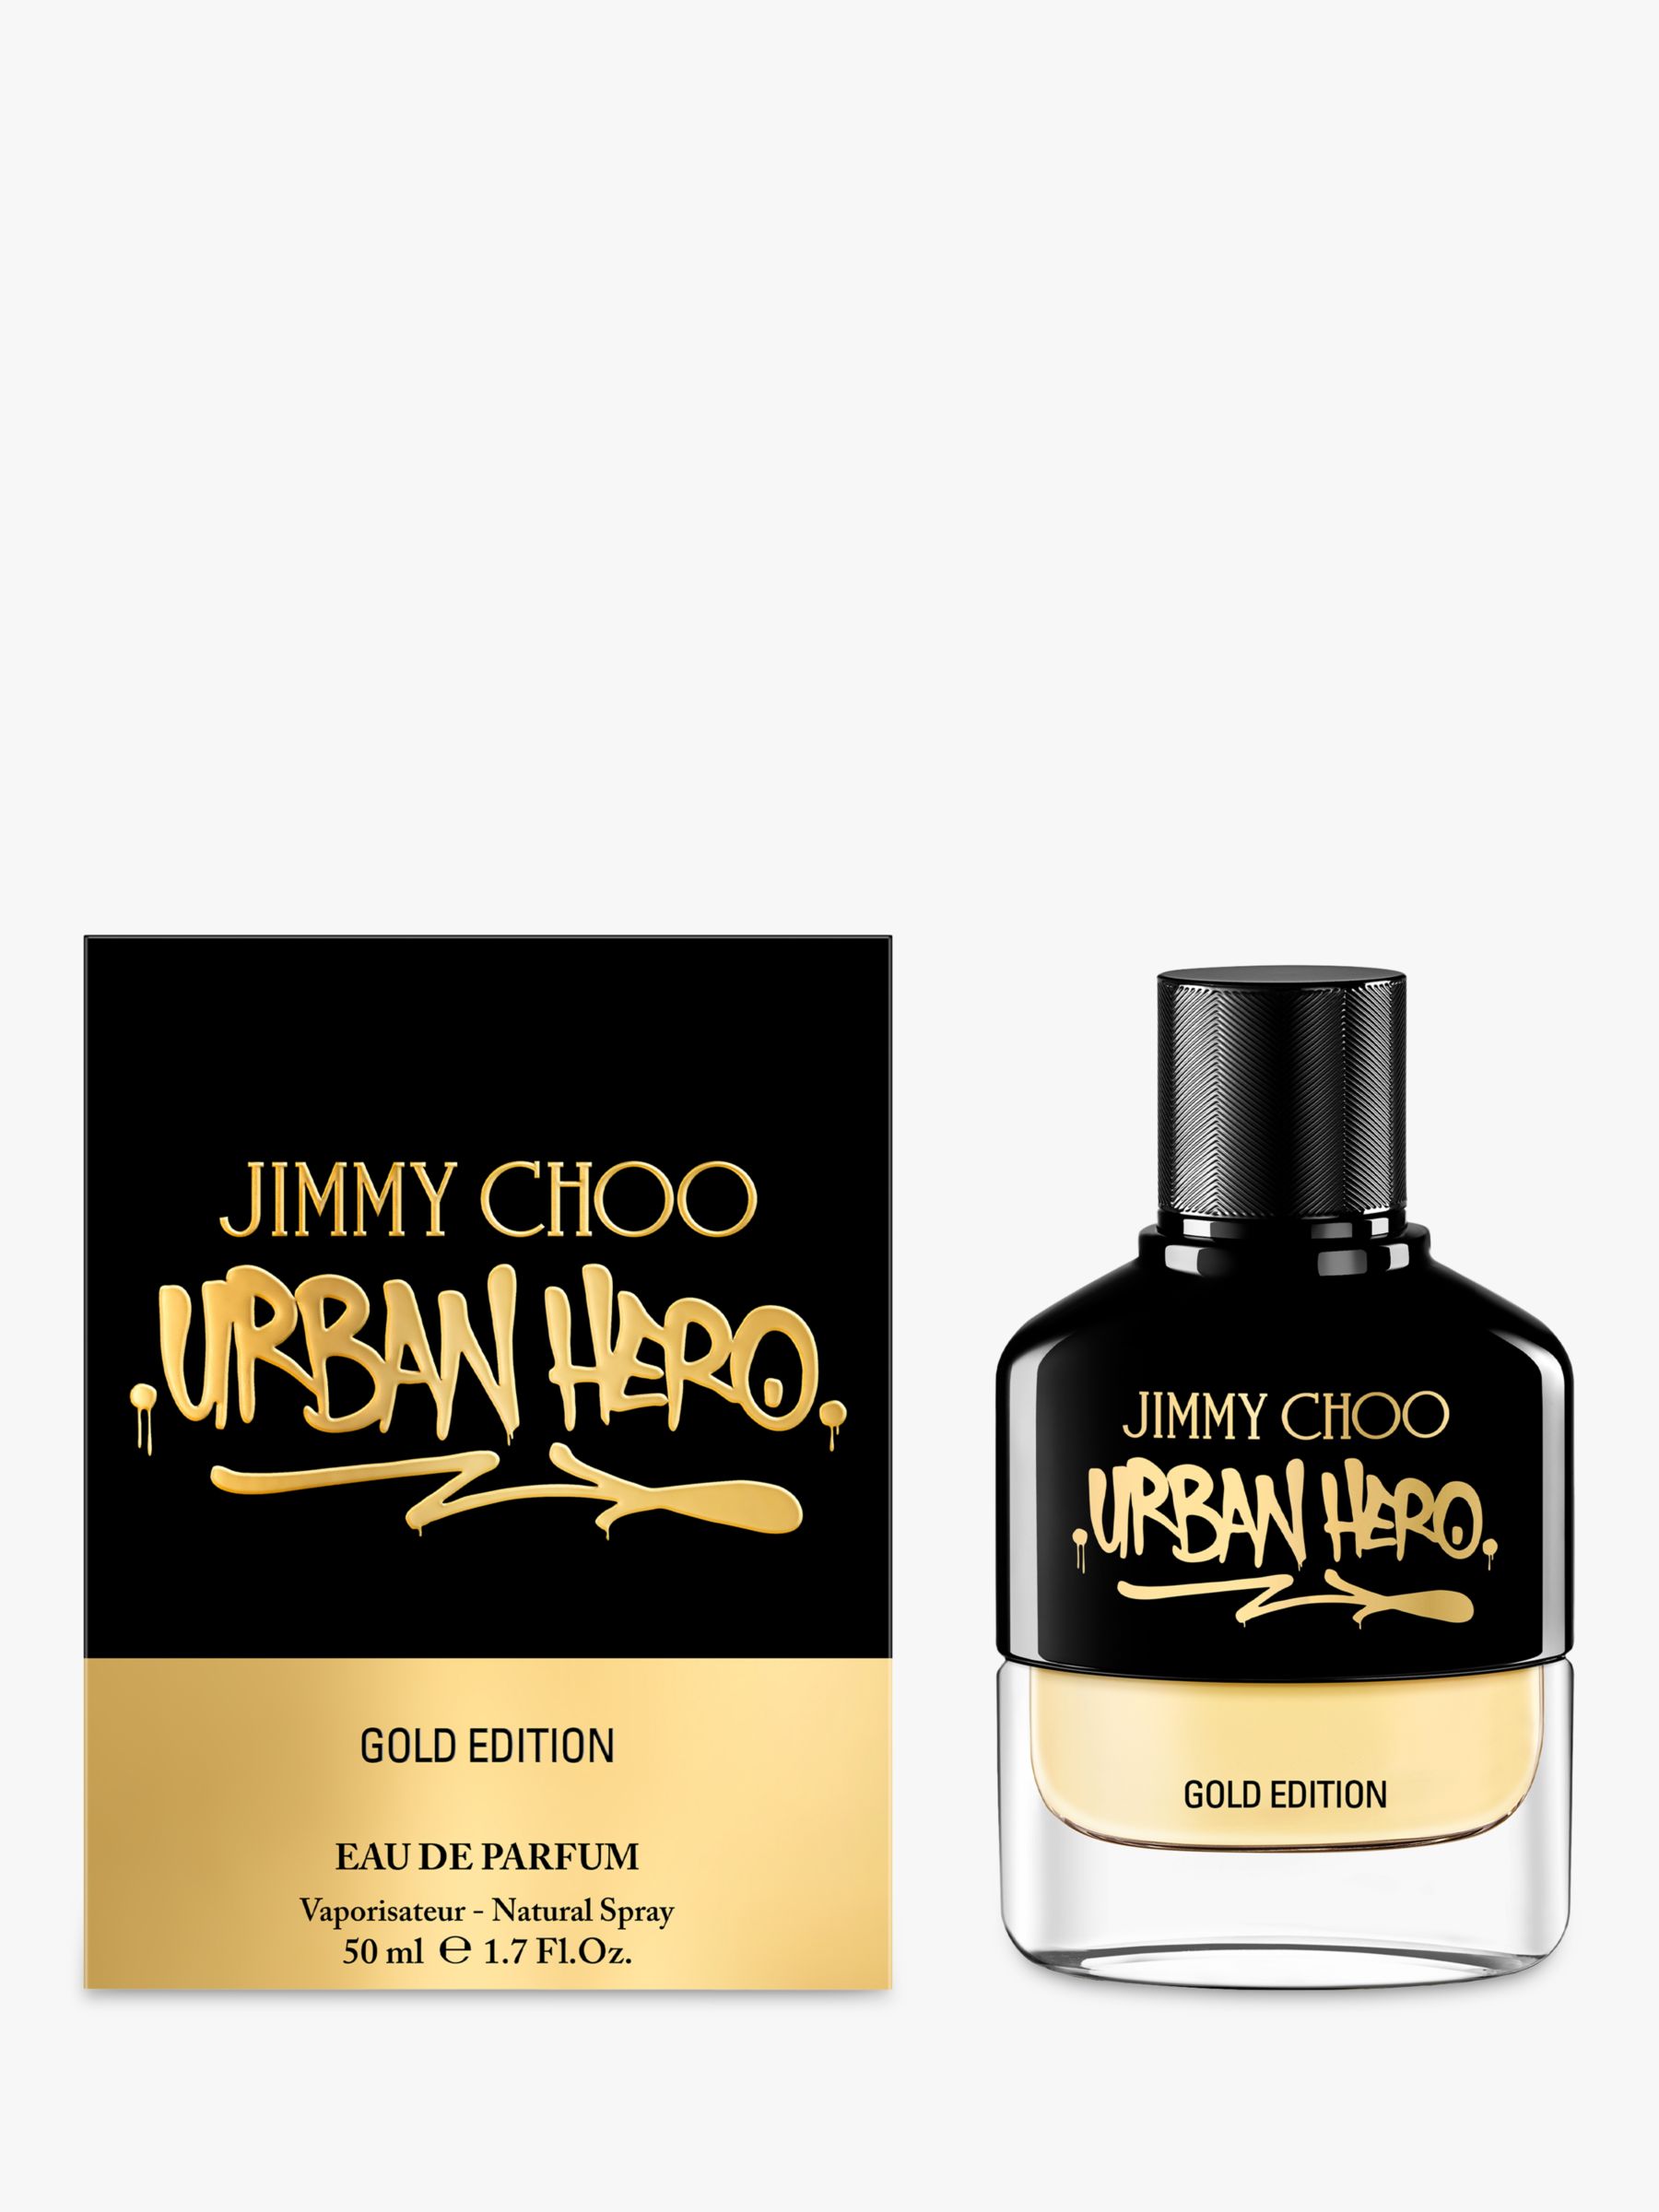 Jimmy Choo Urban Hero Gold Edition Eau de Parfum, 50ml 2